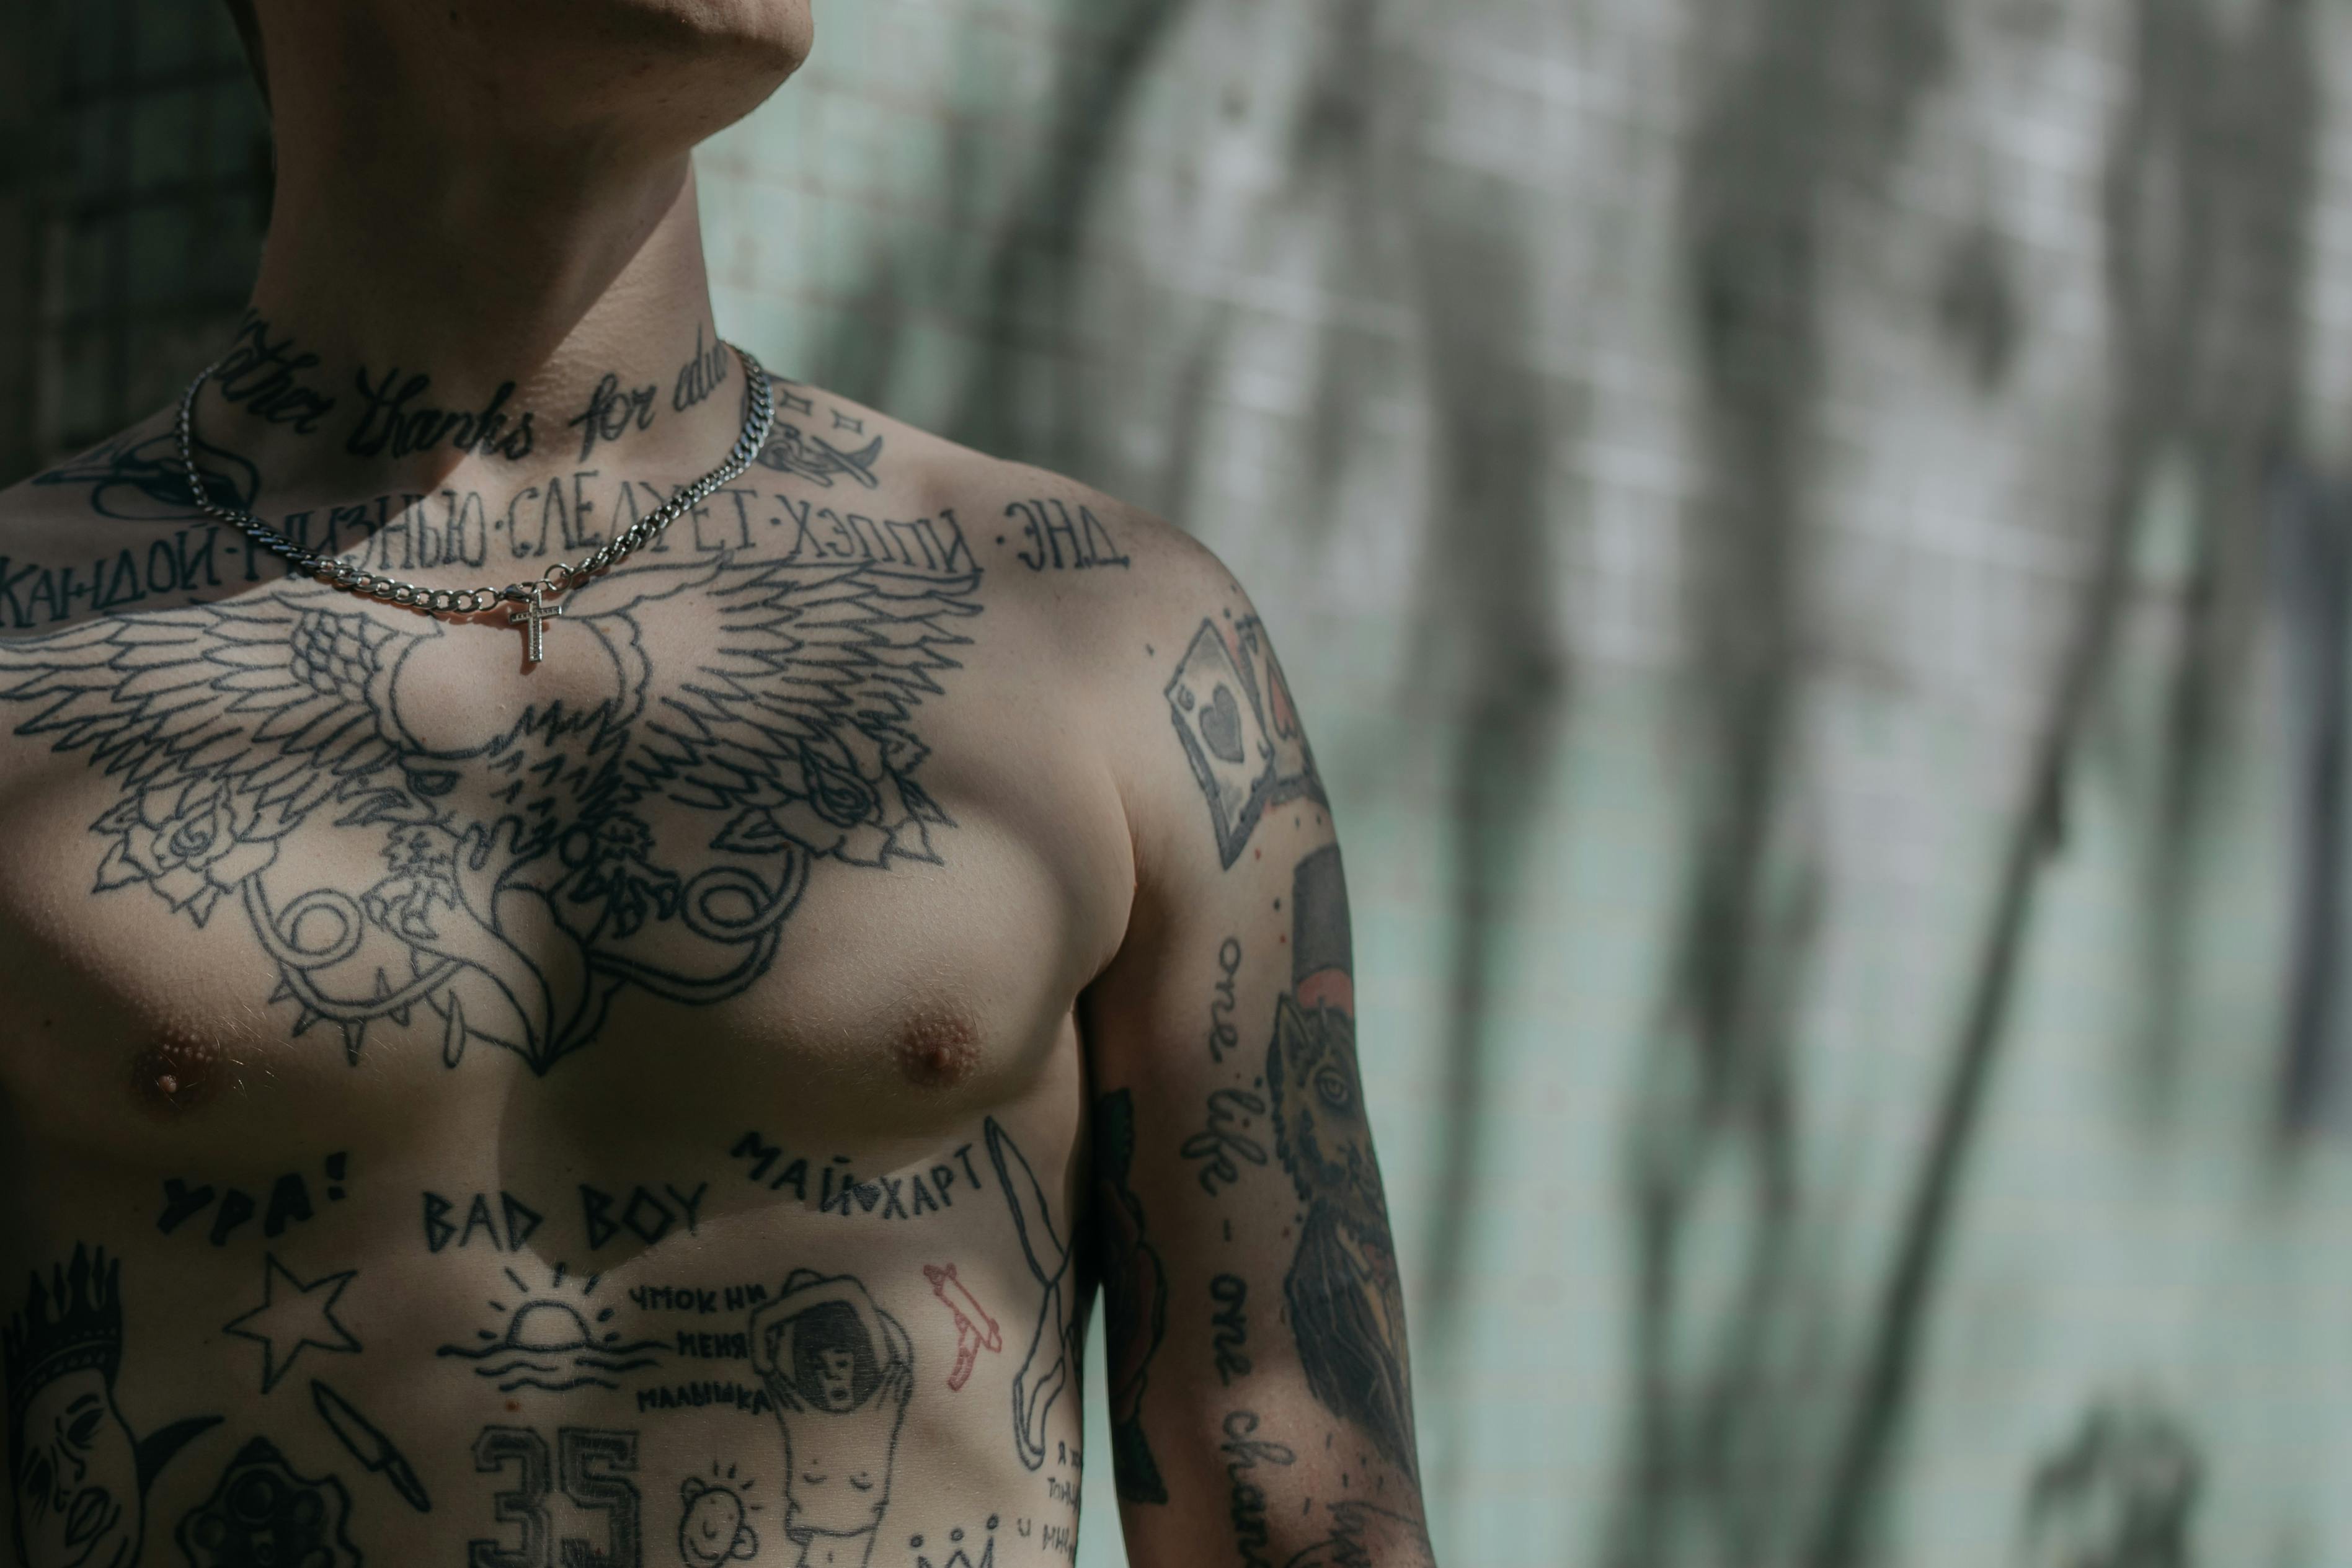 Na tattoos • ShareChat Photos and Videos